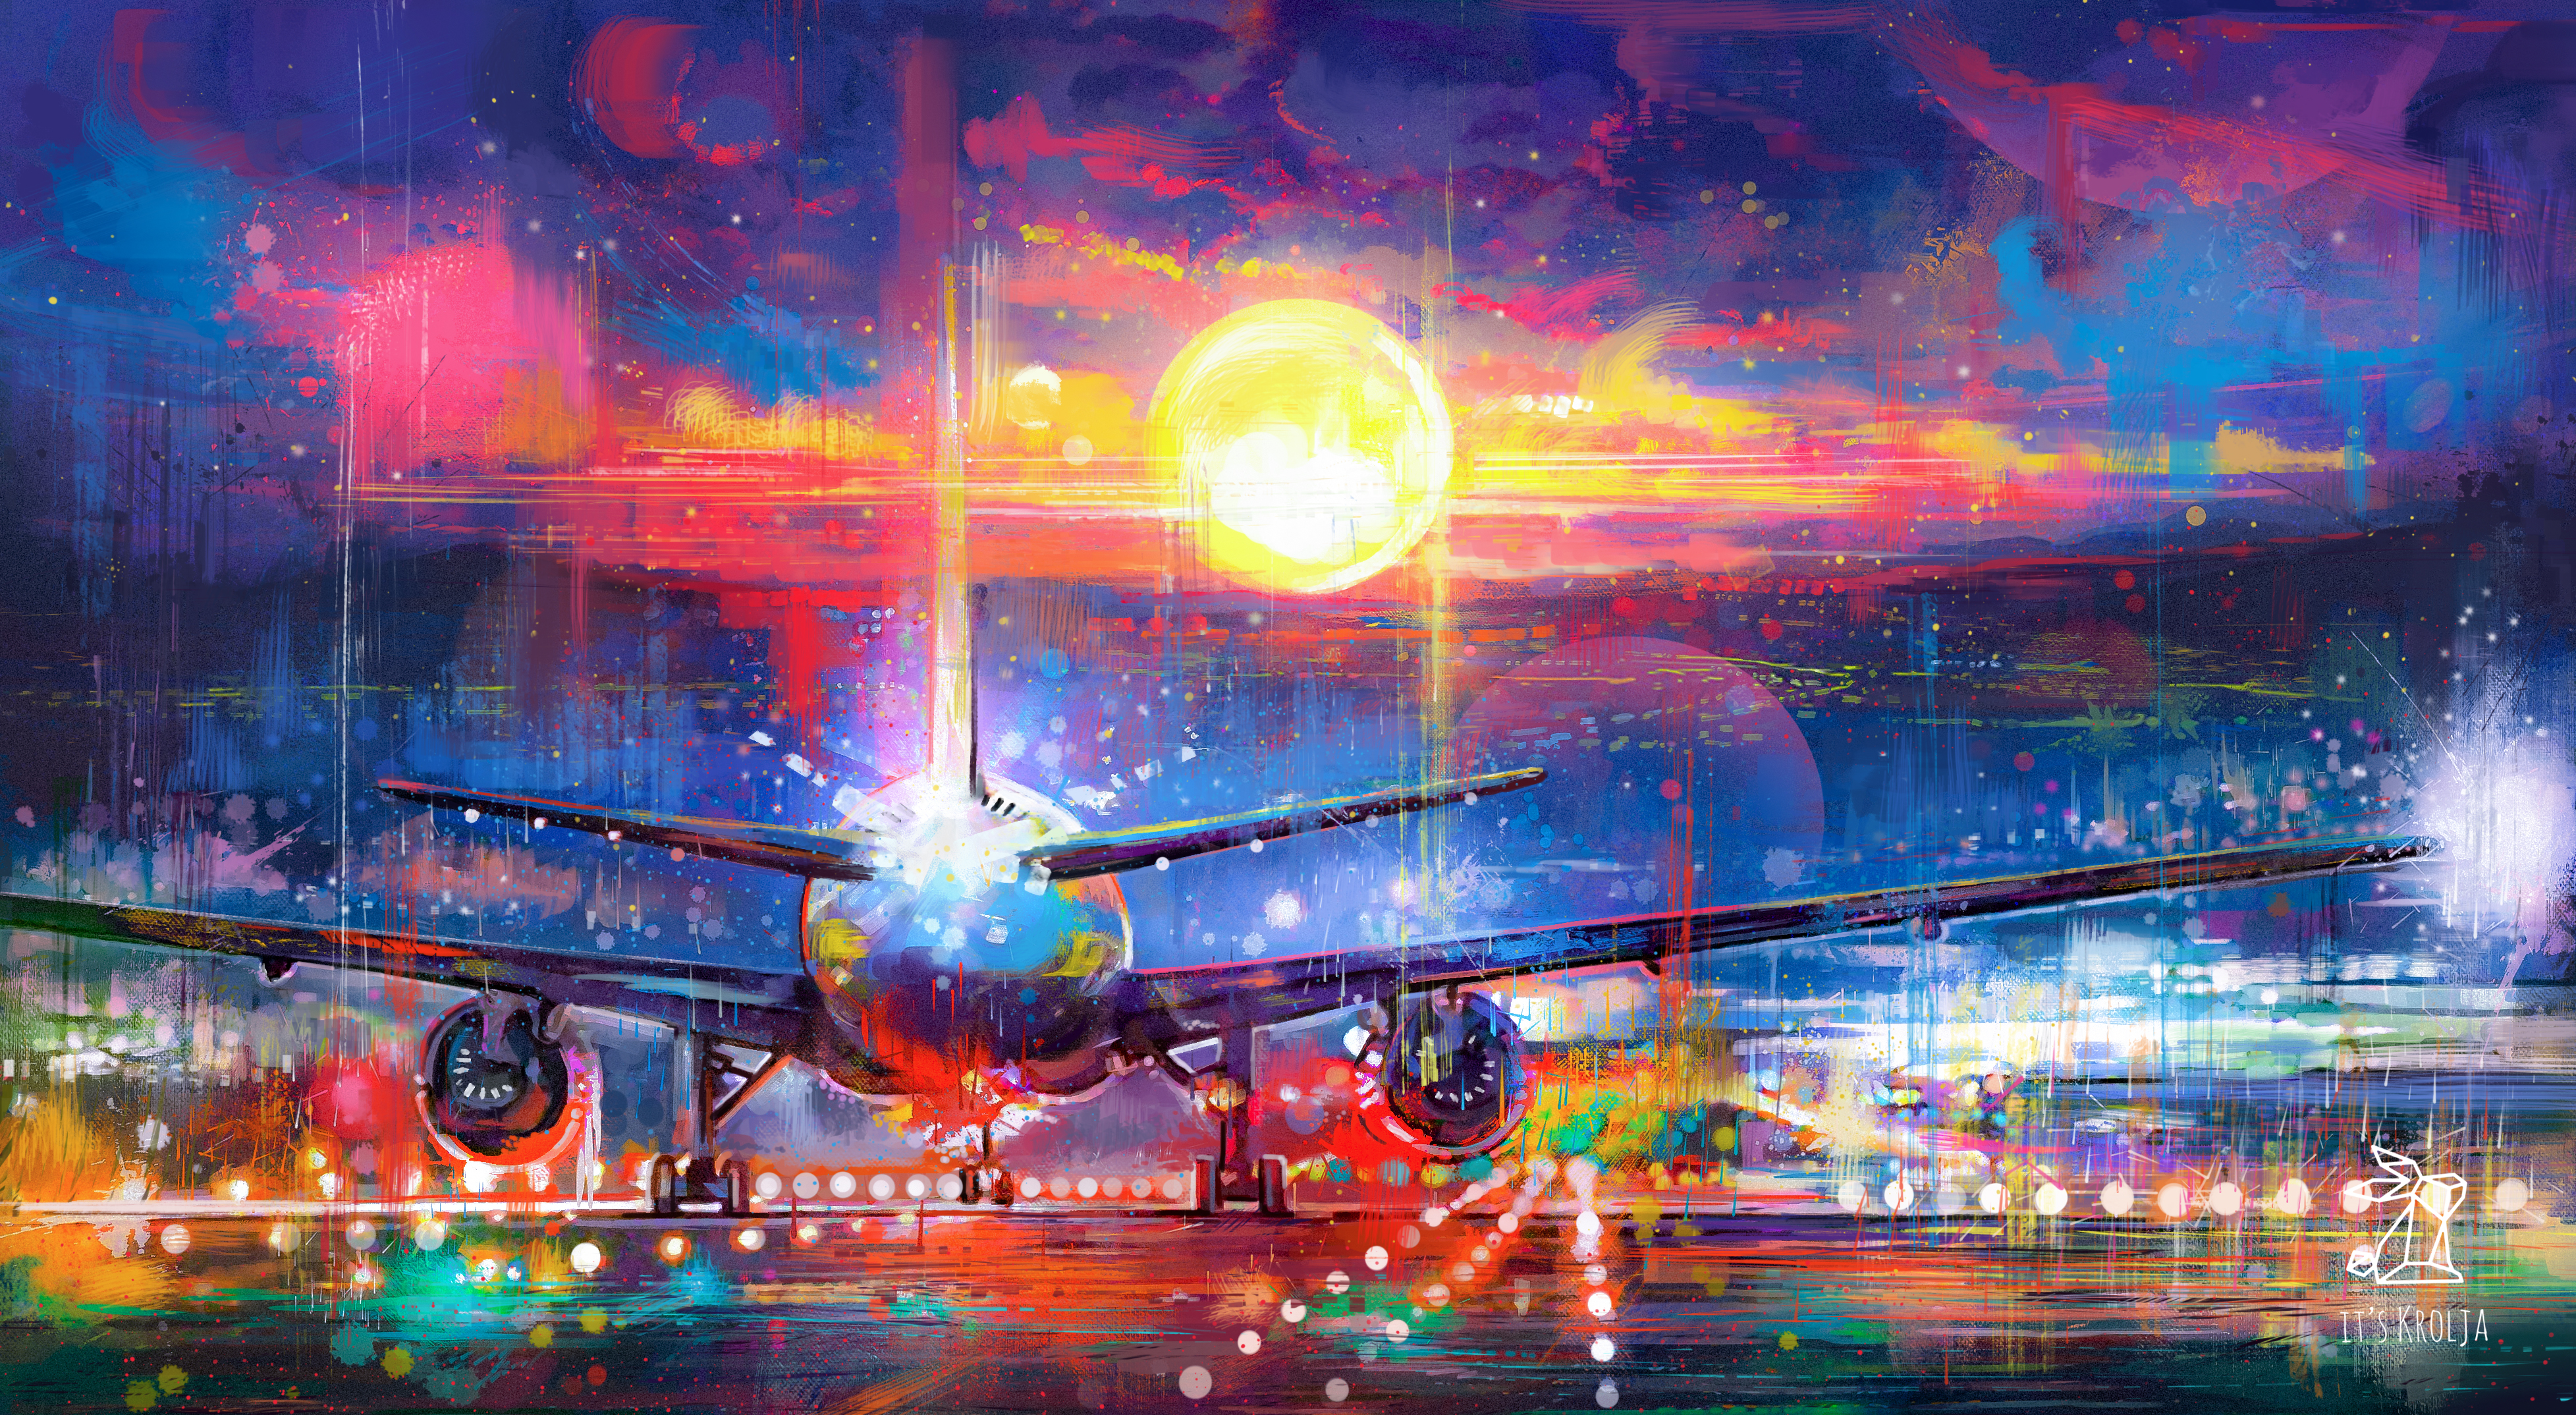 Digital Painting Aircraft Rain Night Airport Itskrolja 3911x2148